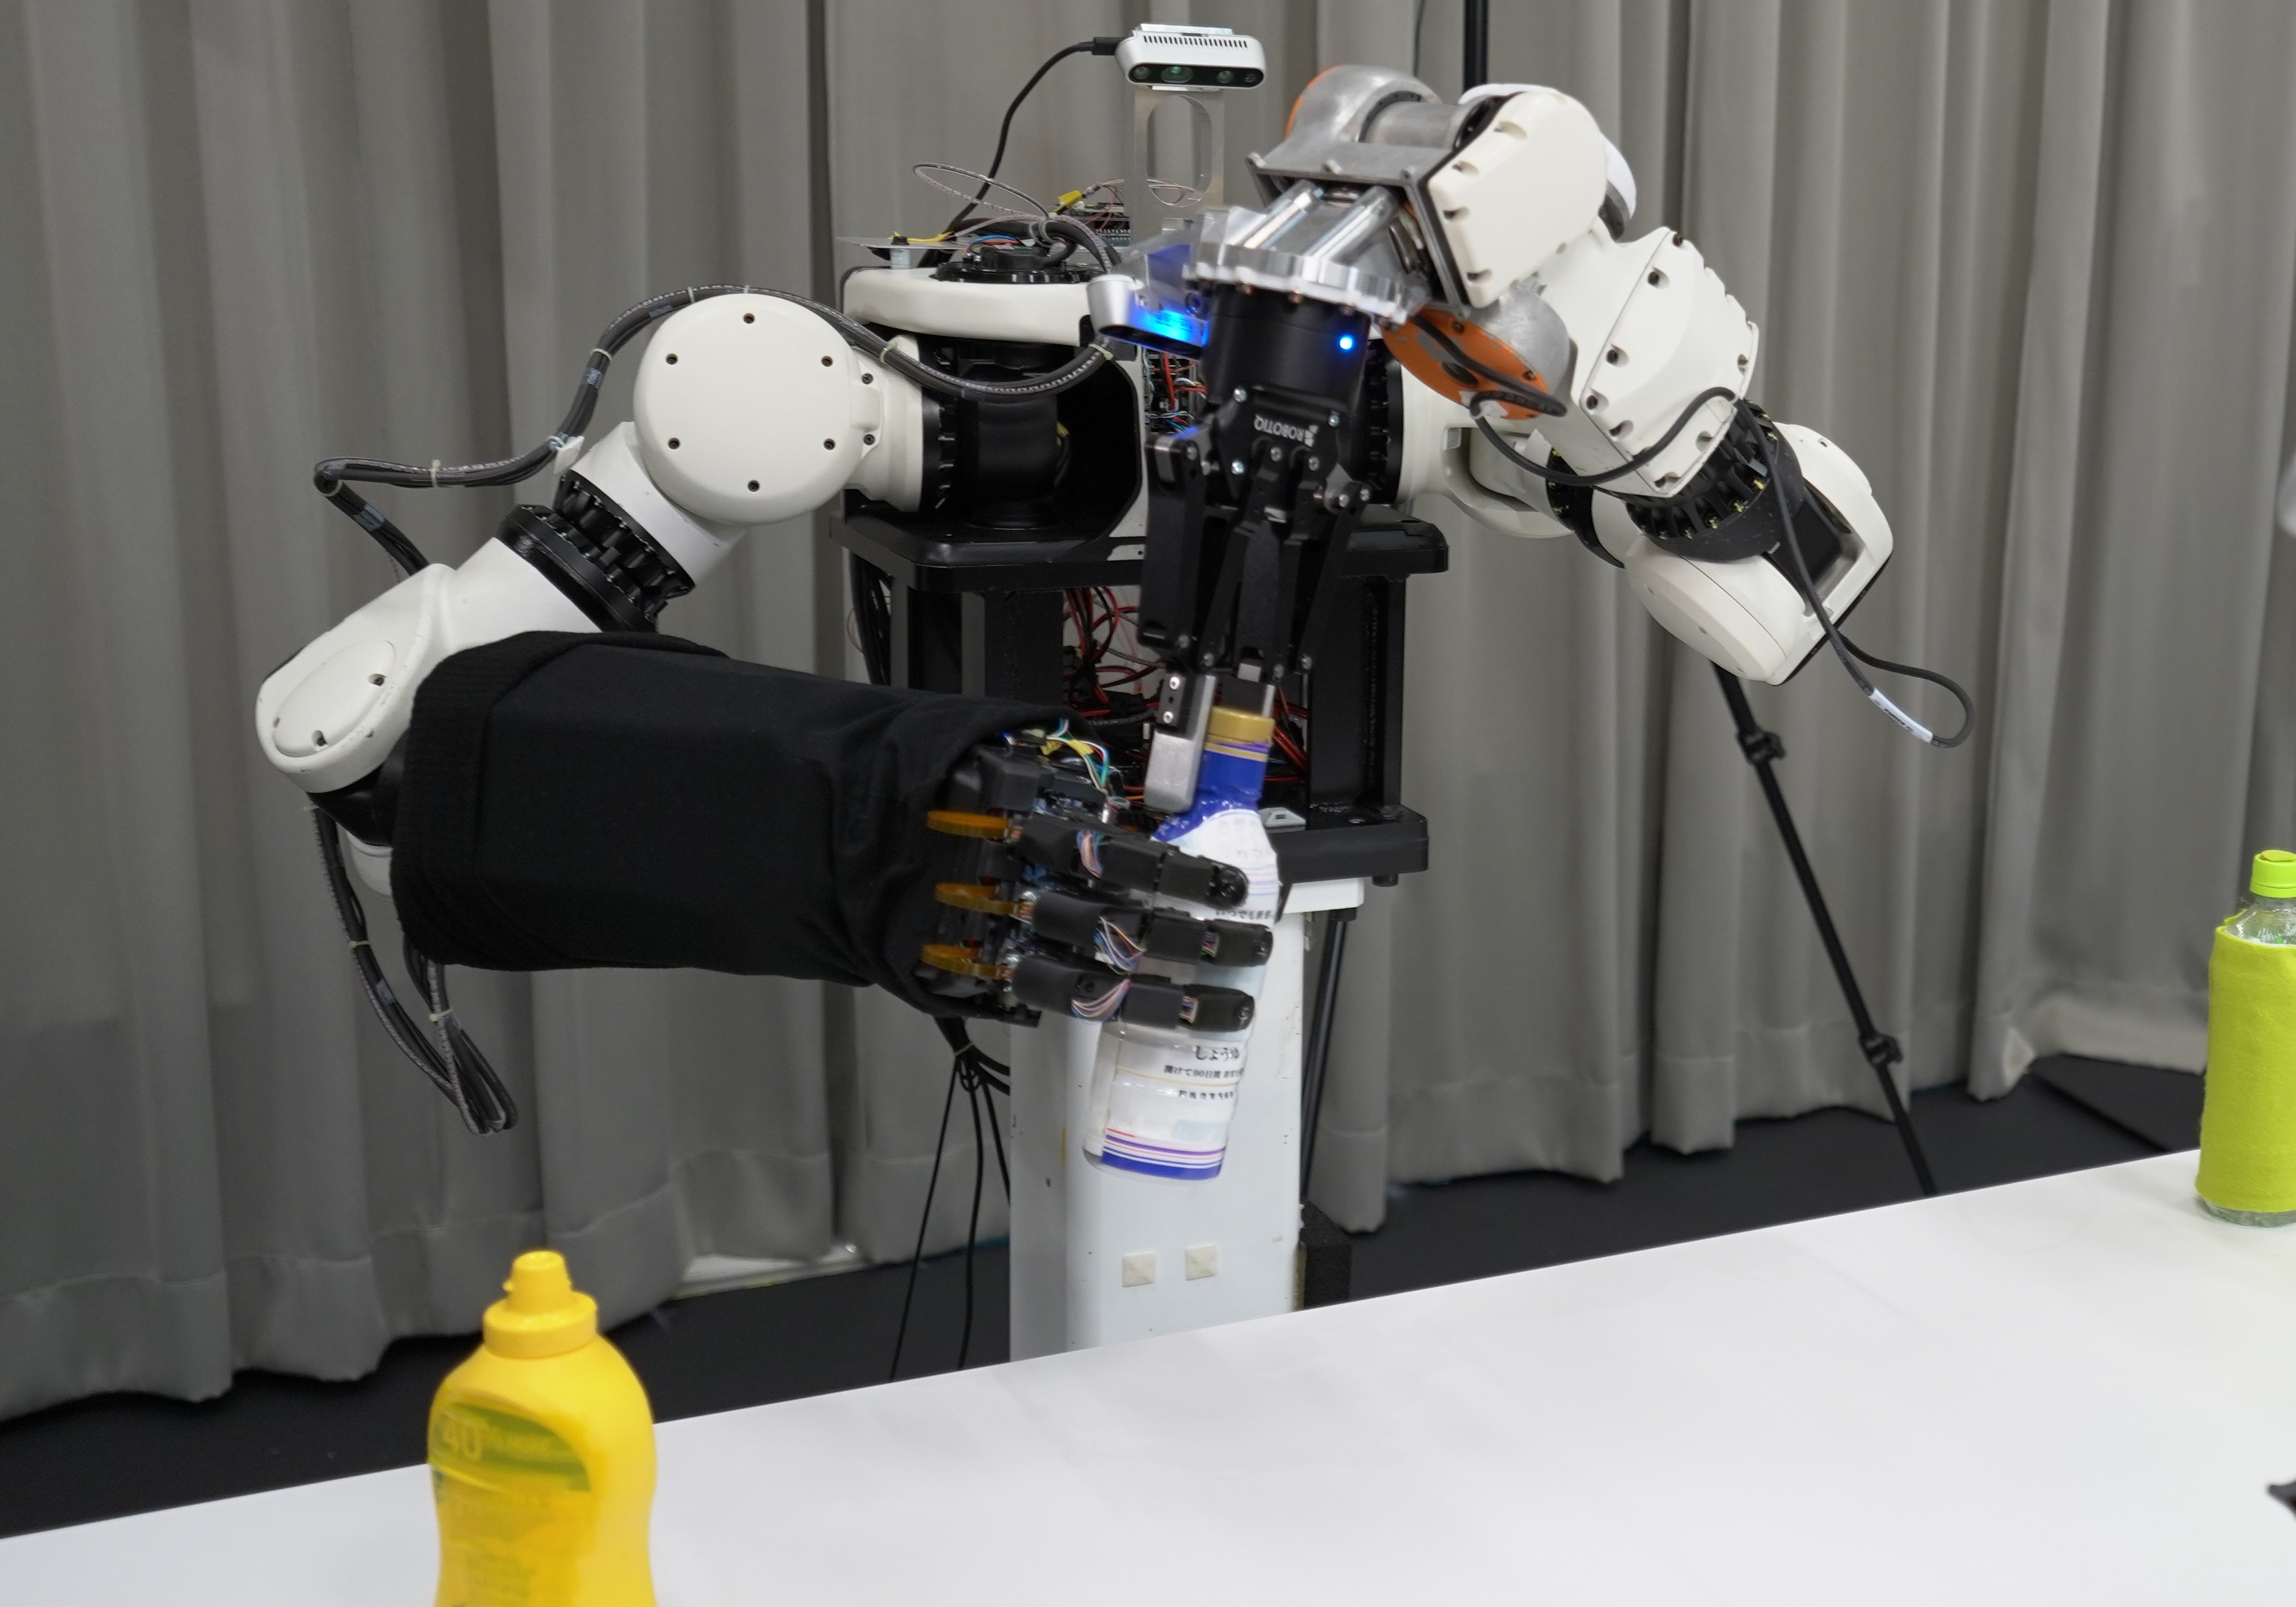 Honda Motor Co announces plans for eVTOL avatar robots and space  technologies  TechCrunch